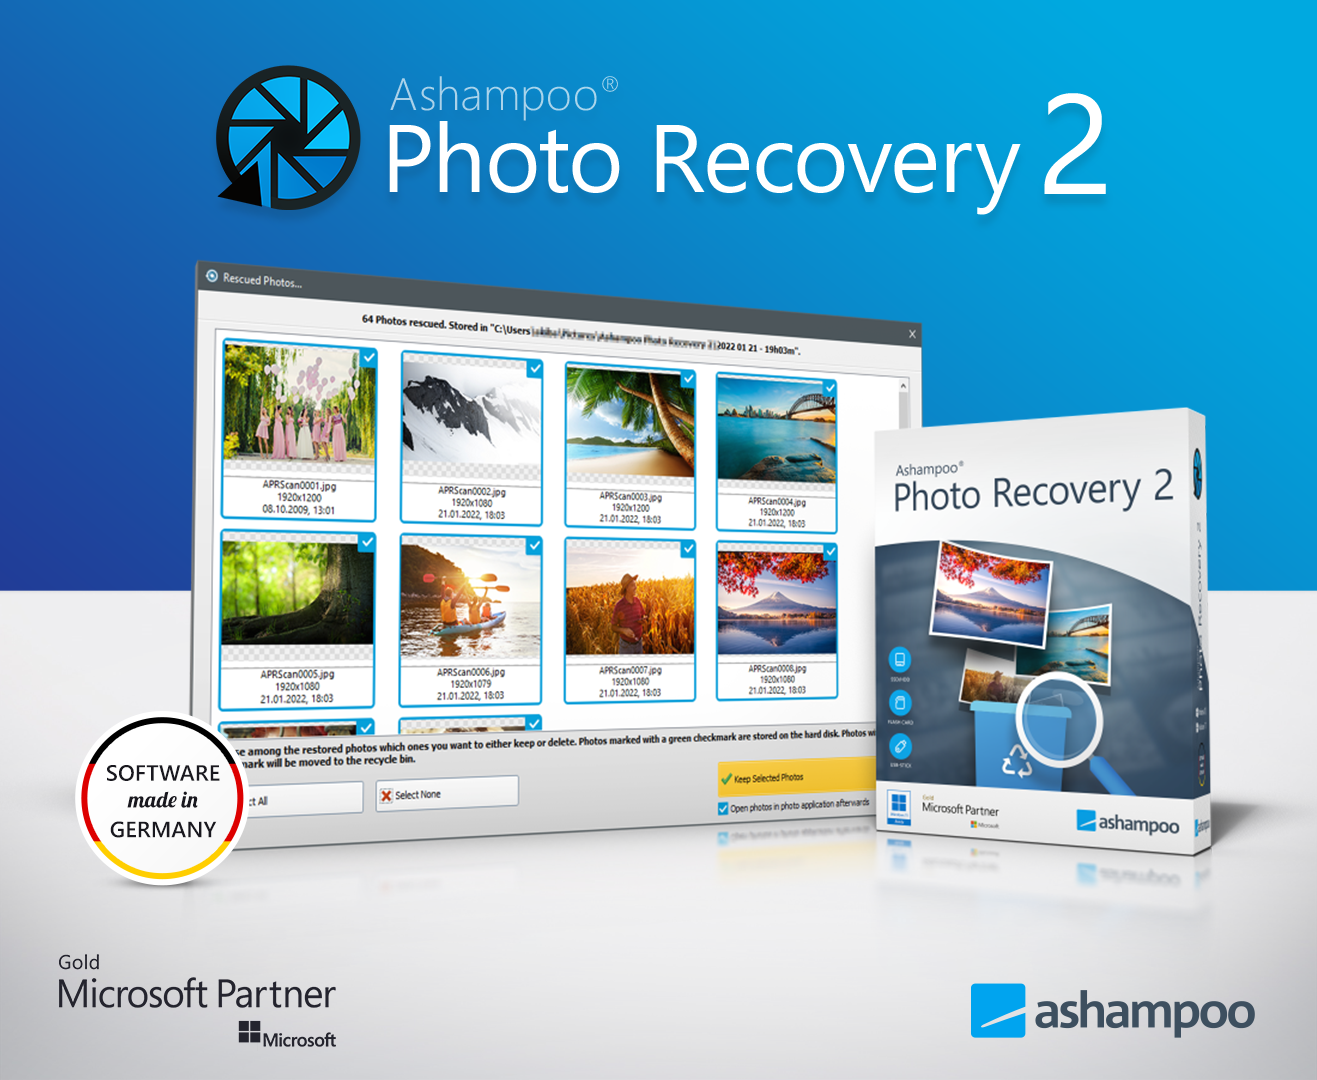 Ashampoo - Photo Recovery 2 - presentation